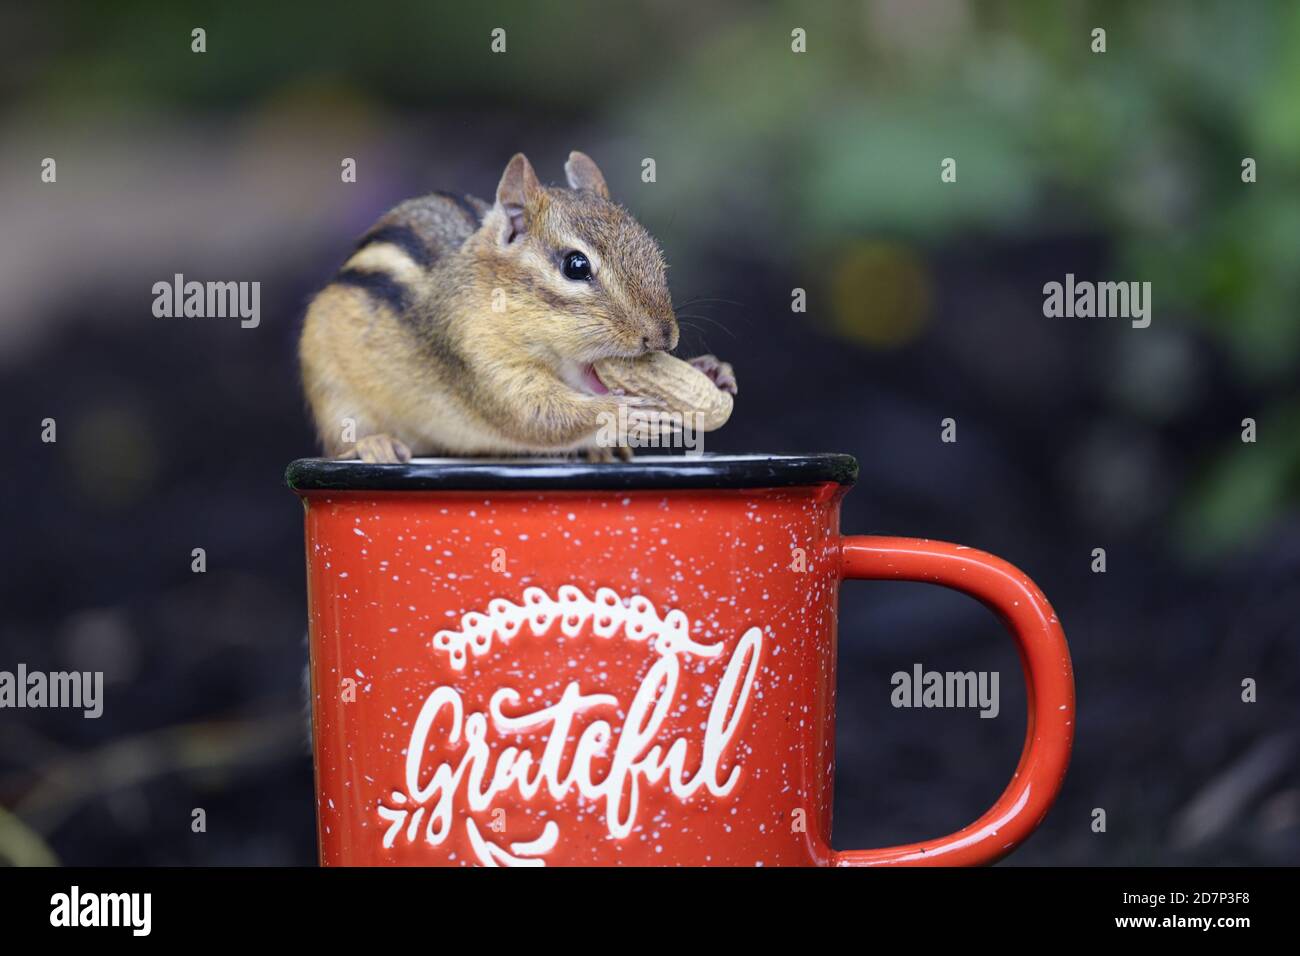 An Eastern chipmunk in a mug eating peanuts Stock Photo